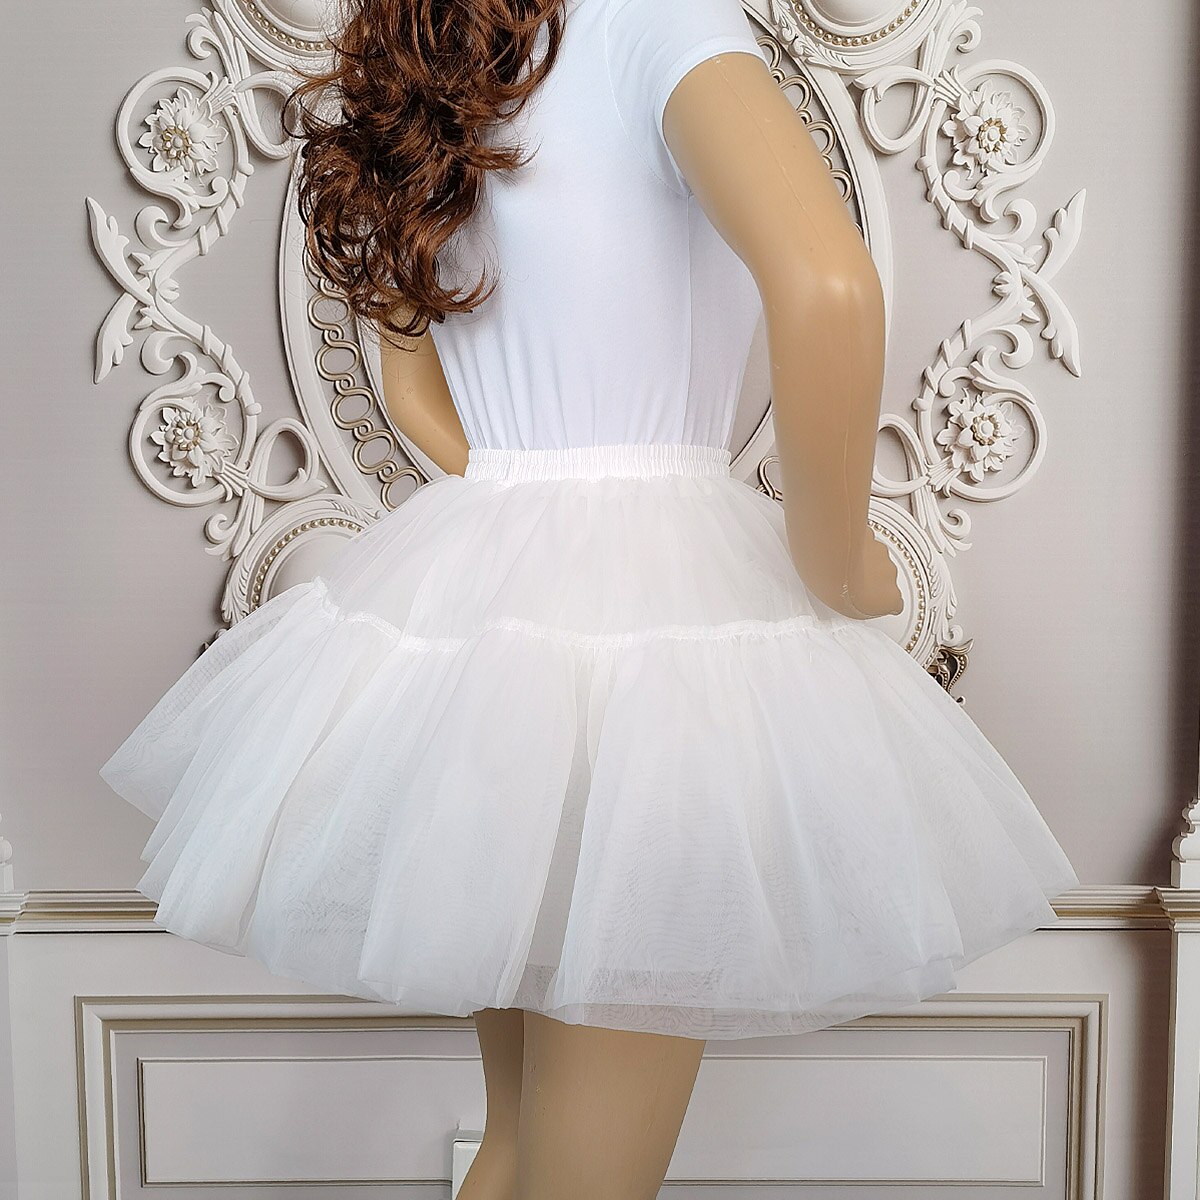 JIERUIZE robe de bal en Organza jupon court Lolita Cosplay robe courte jupon Ballet Tutu jupe Rockabilly Crinoline